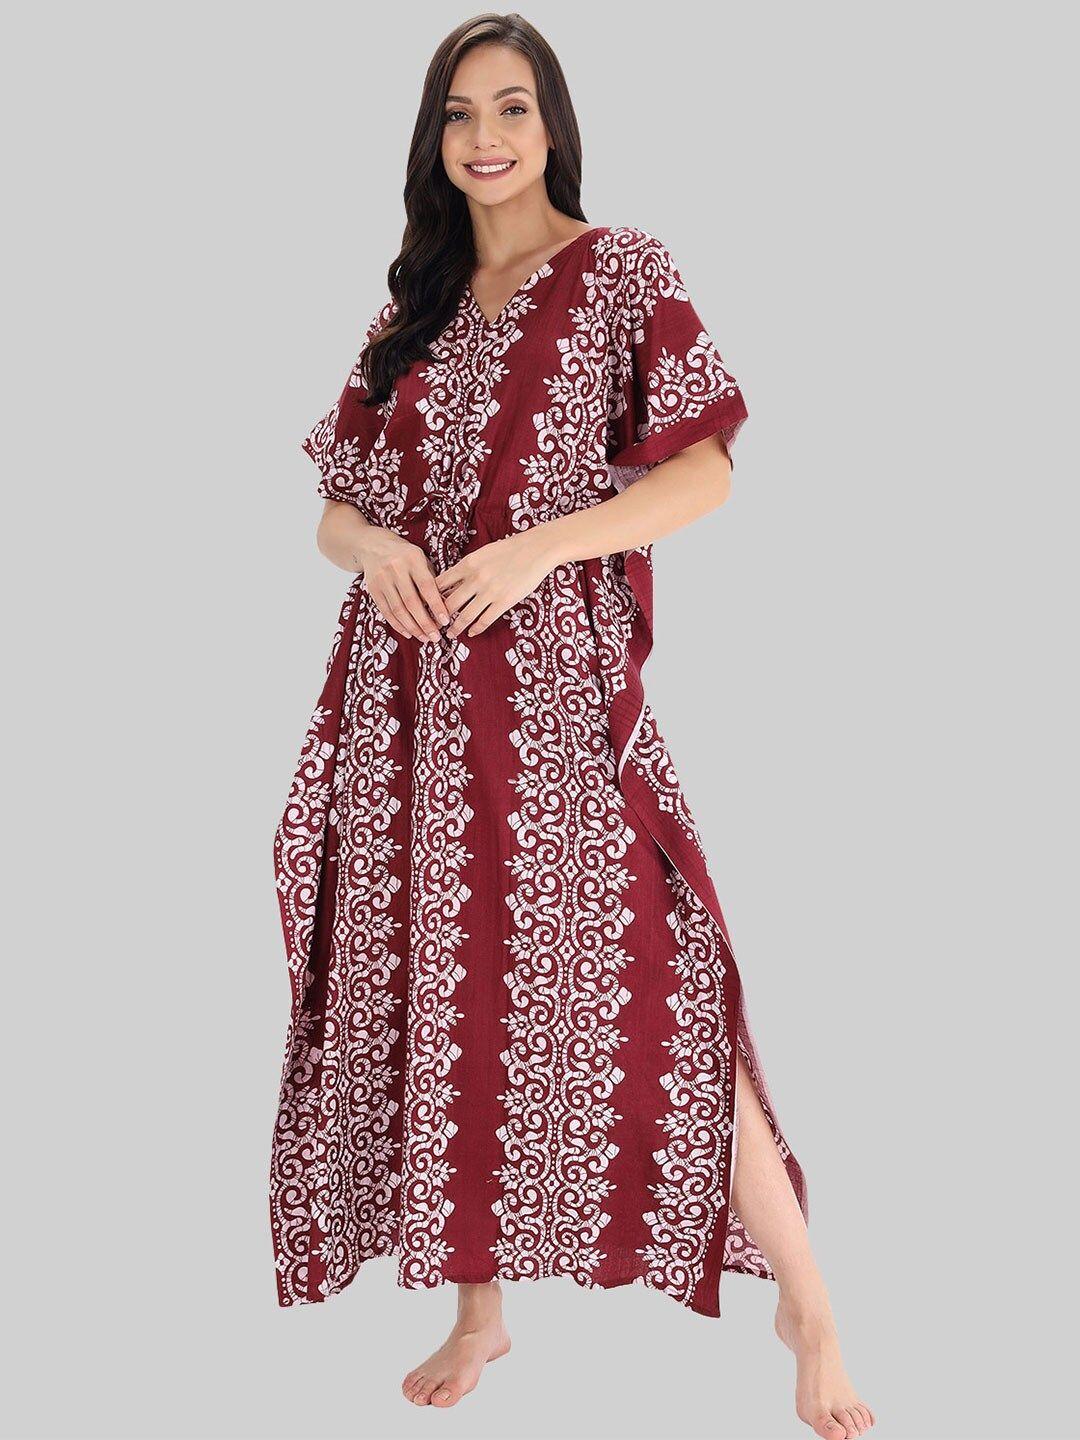 shararat-women's-cotton-kaftan-nighty/night-dress/night-gown---free-size-(brown)